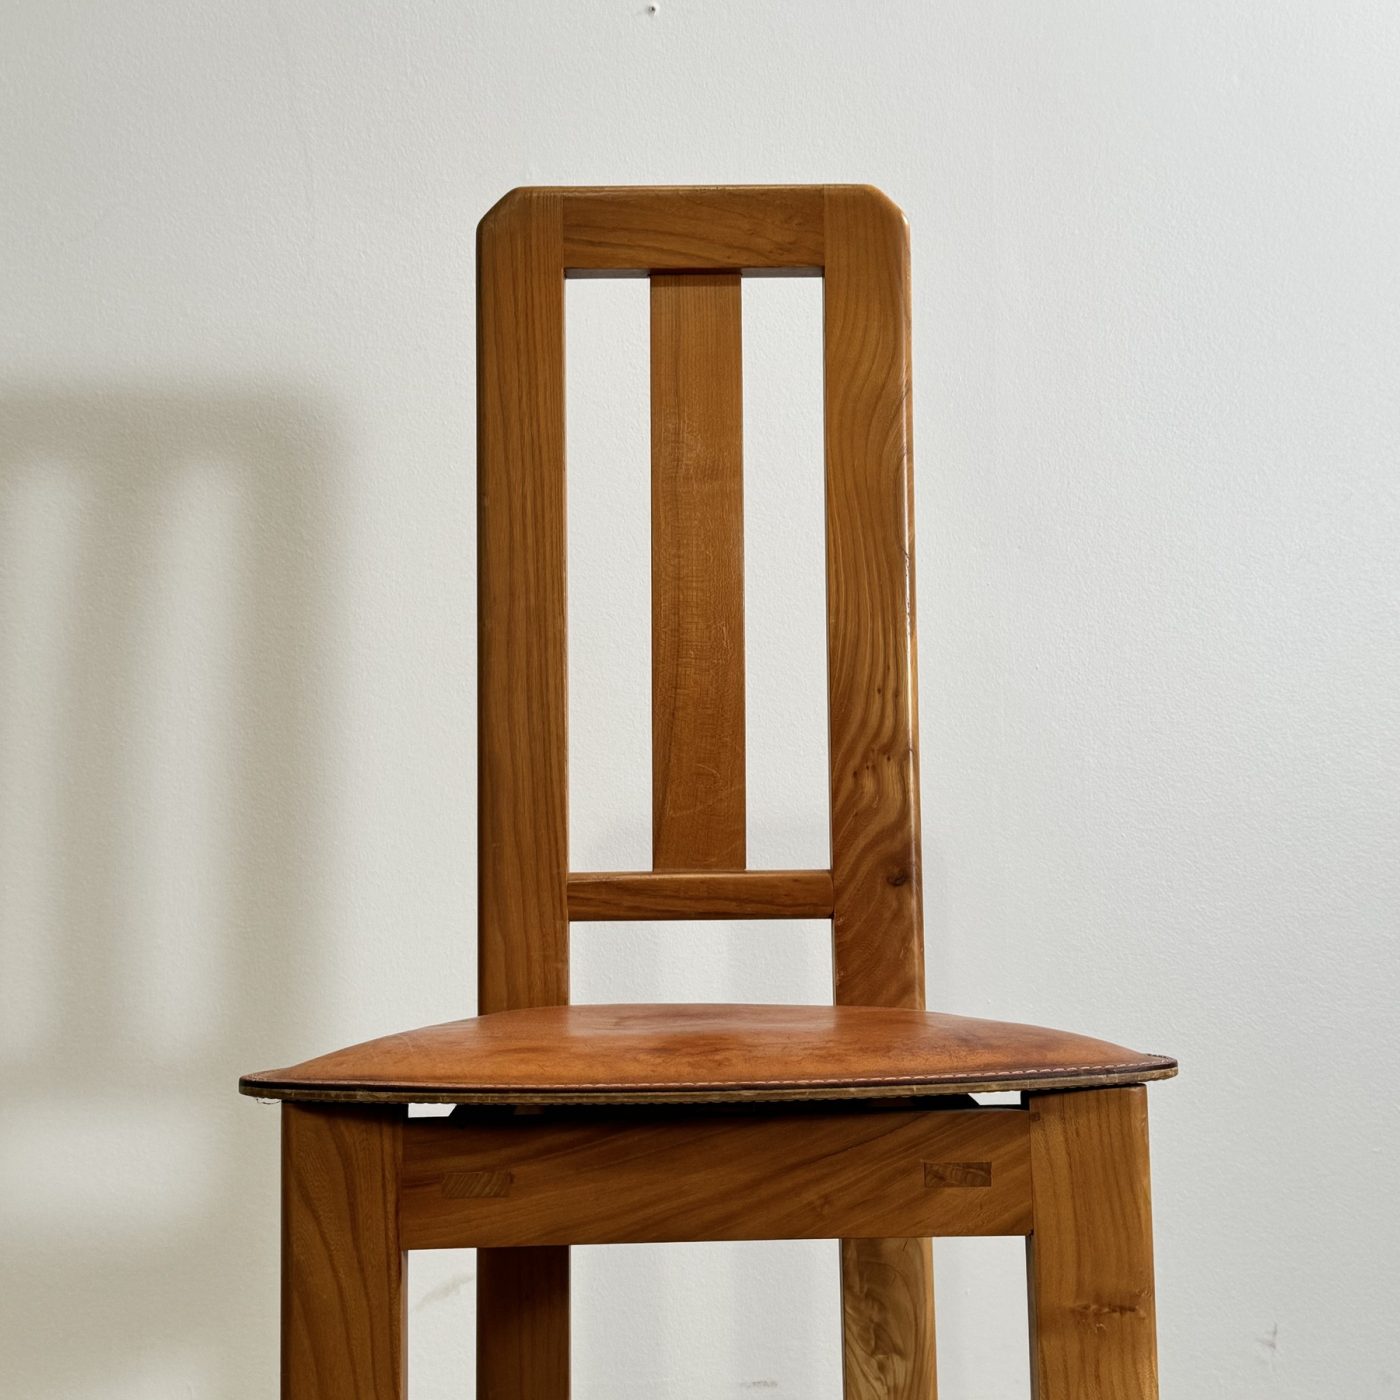 objet-vagabond-elm-chairs0002